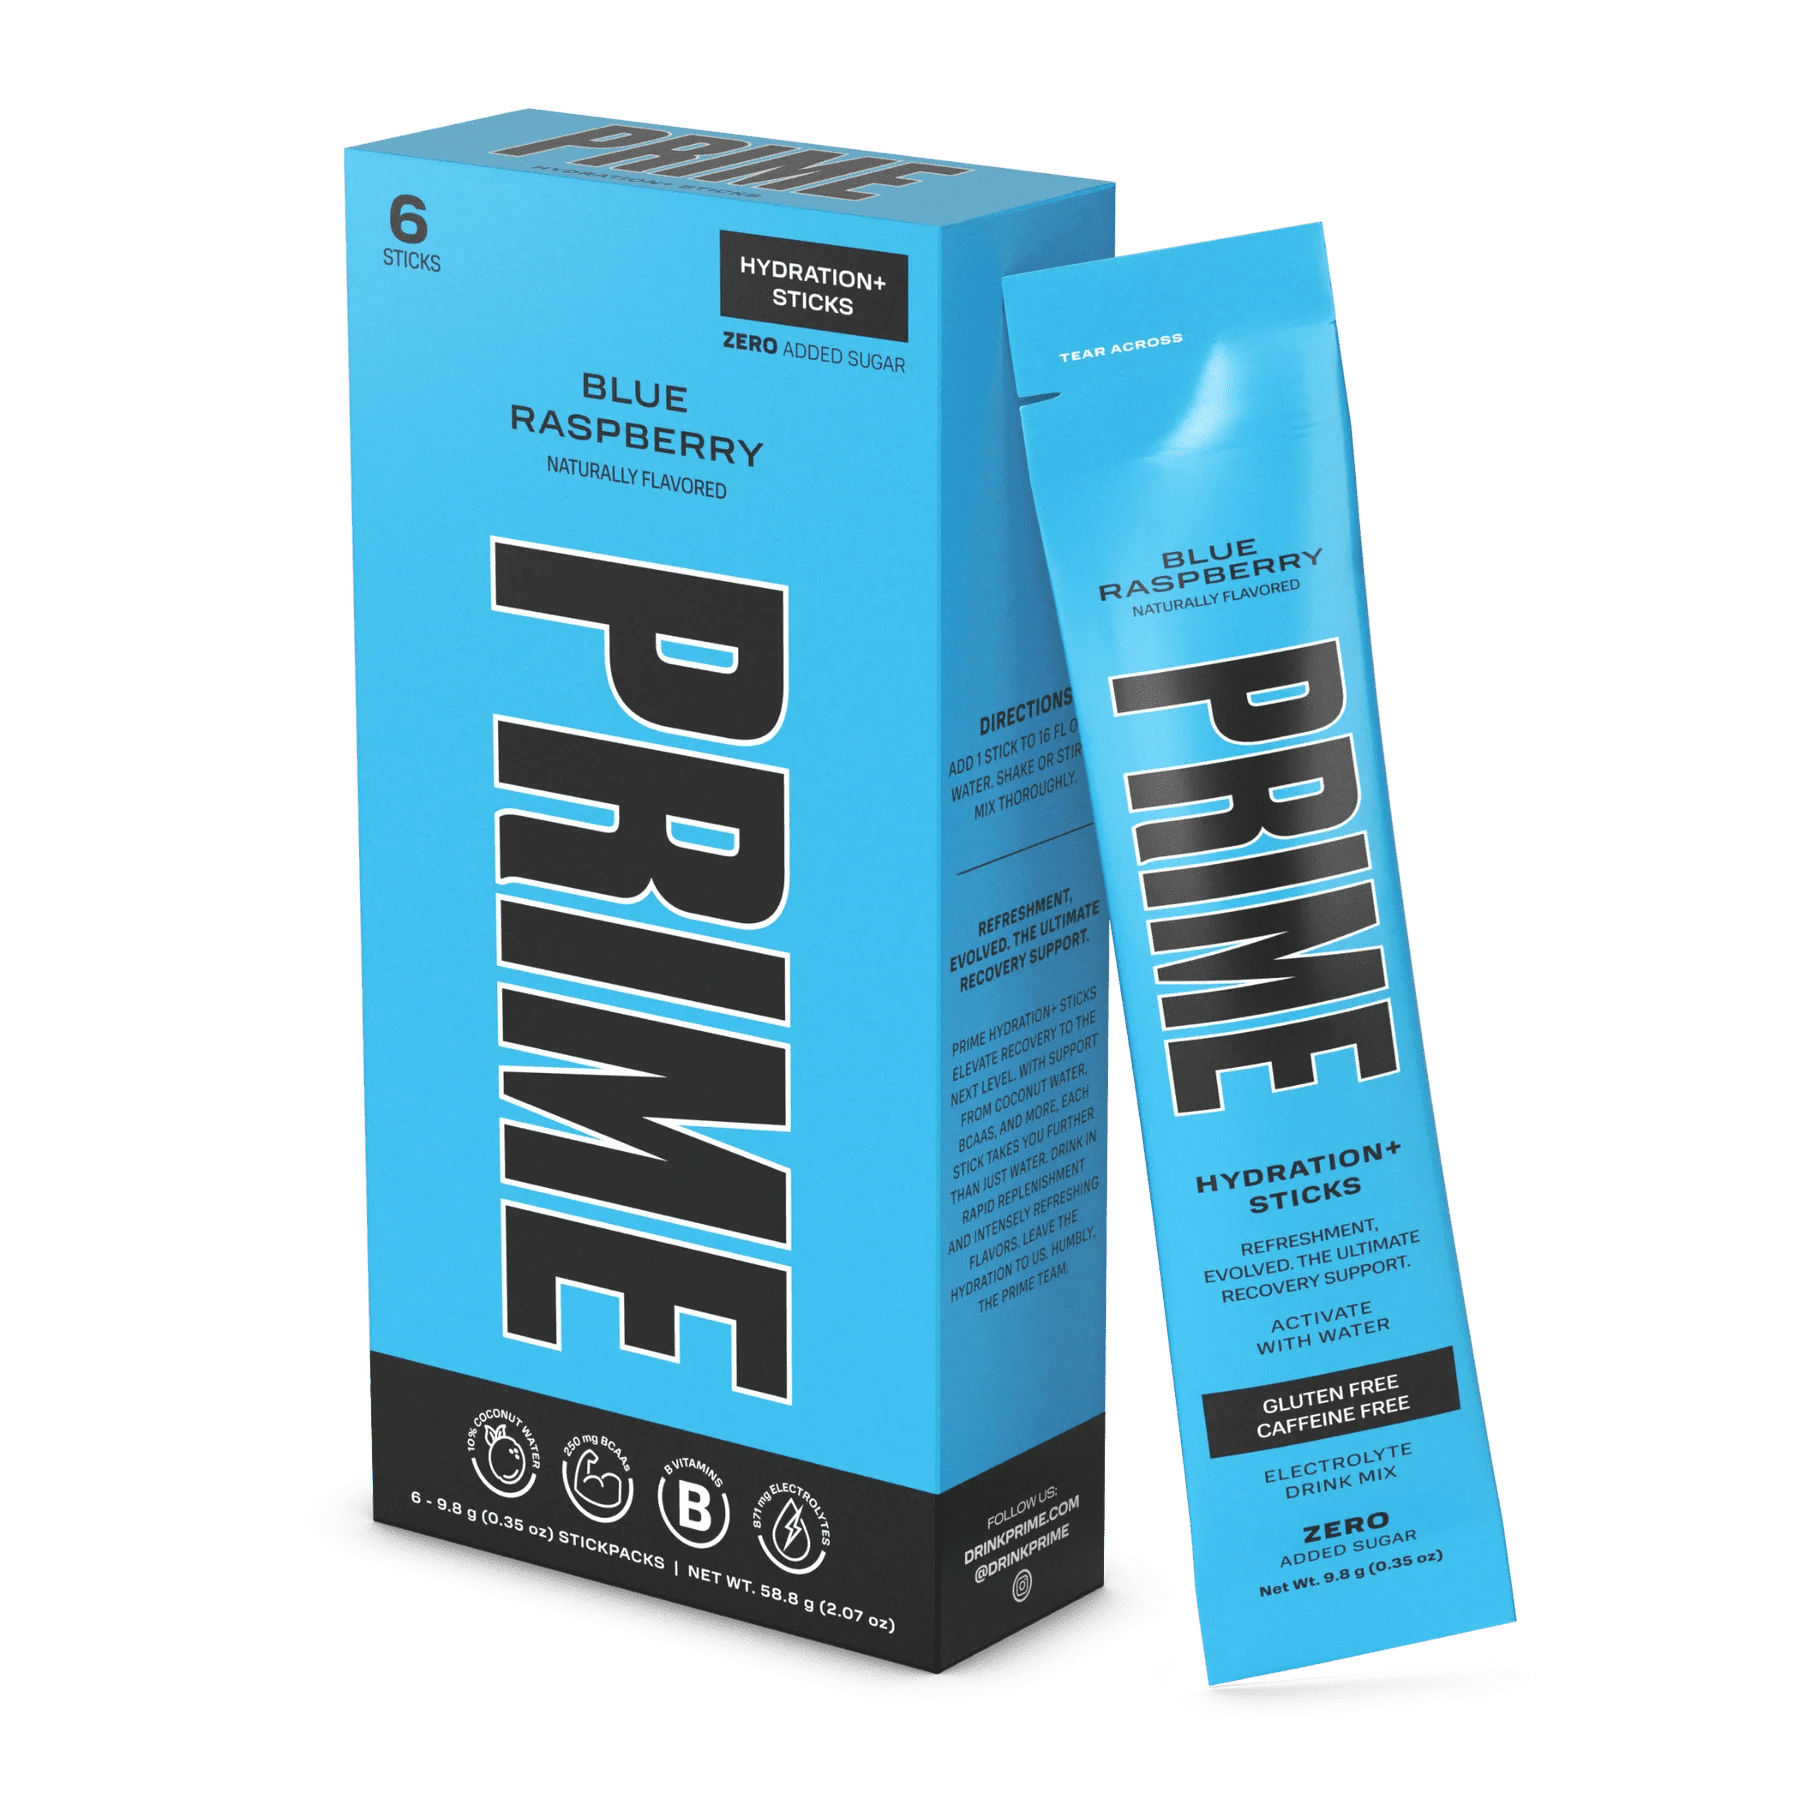 Prime Hydration Sticks come to Vitamin Shoppe at $13.99 a box